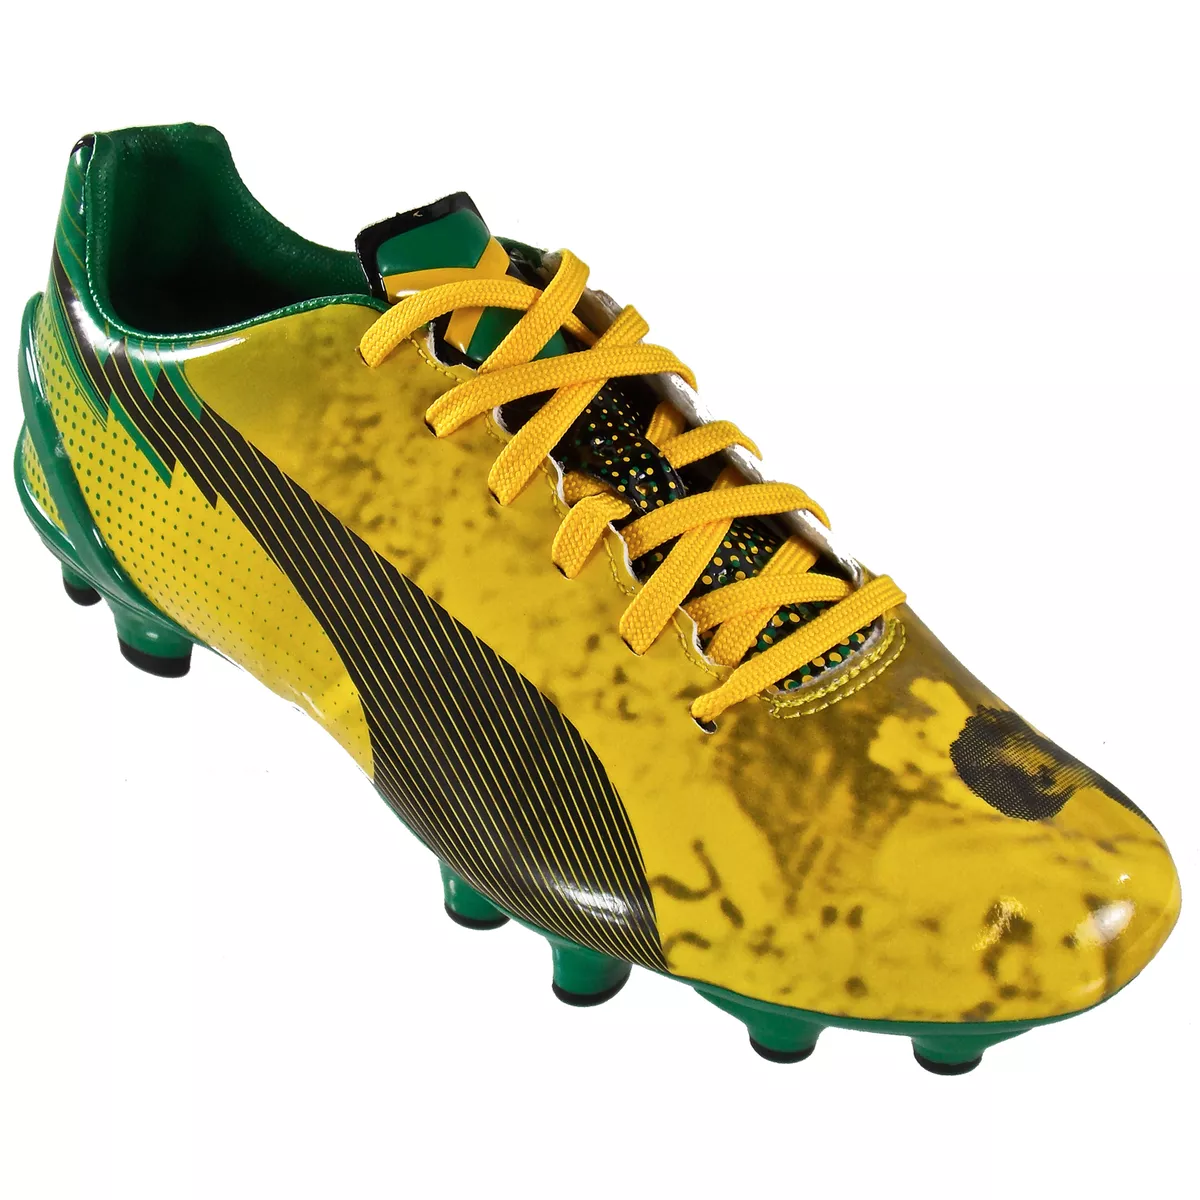 Puma SPEED 3 CEDELLA MARLEY JAMAICA Soccer Football Cleat Boot 8 | eBay